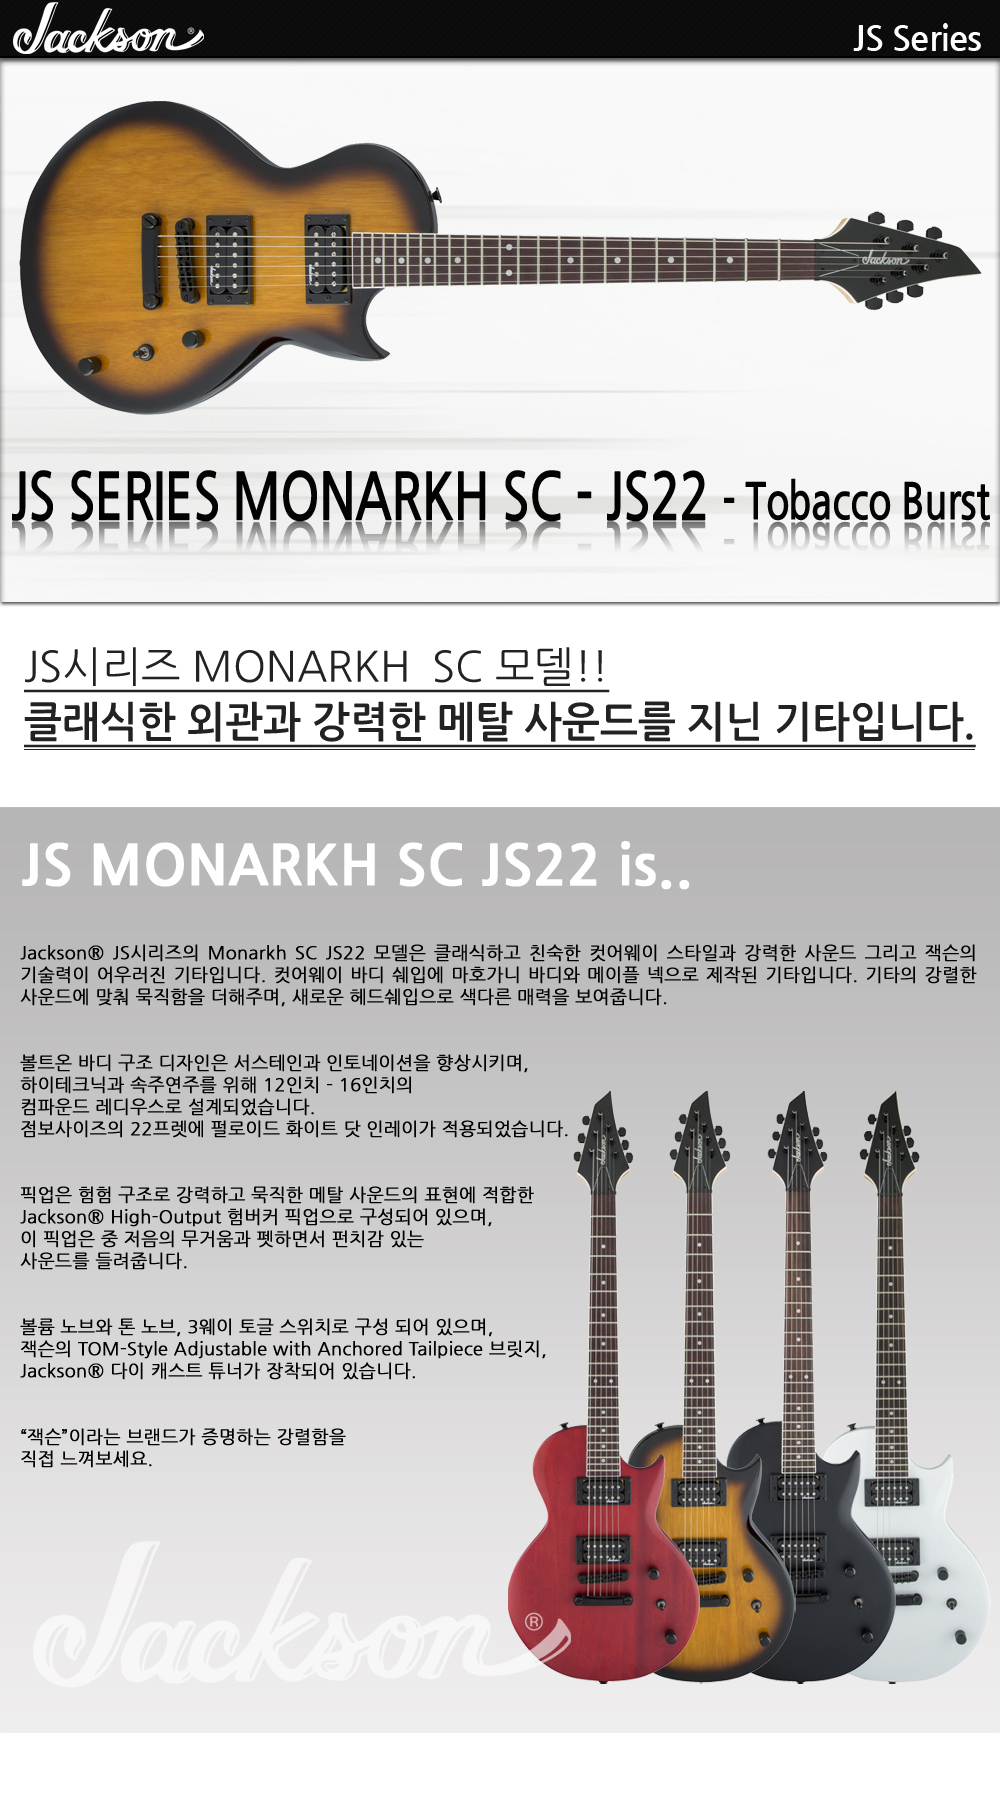 Jackson-JS-Monarkh-SC-JS22-TobaccoBurst_1_105002.jpg